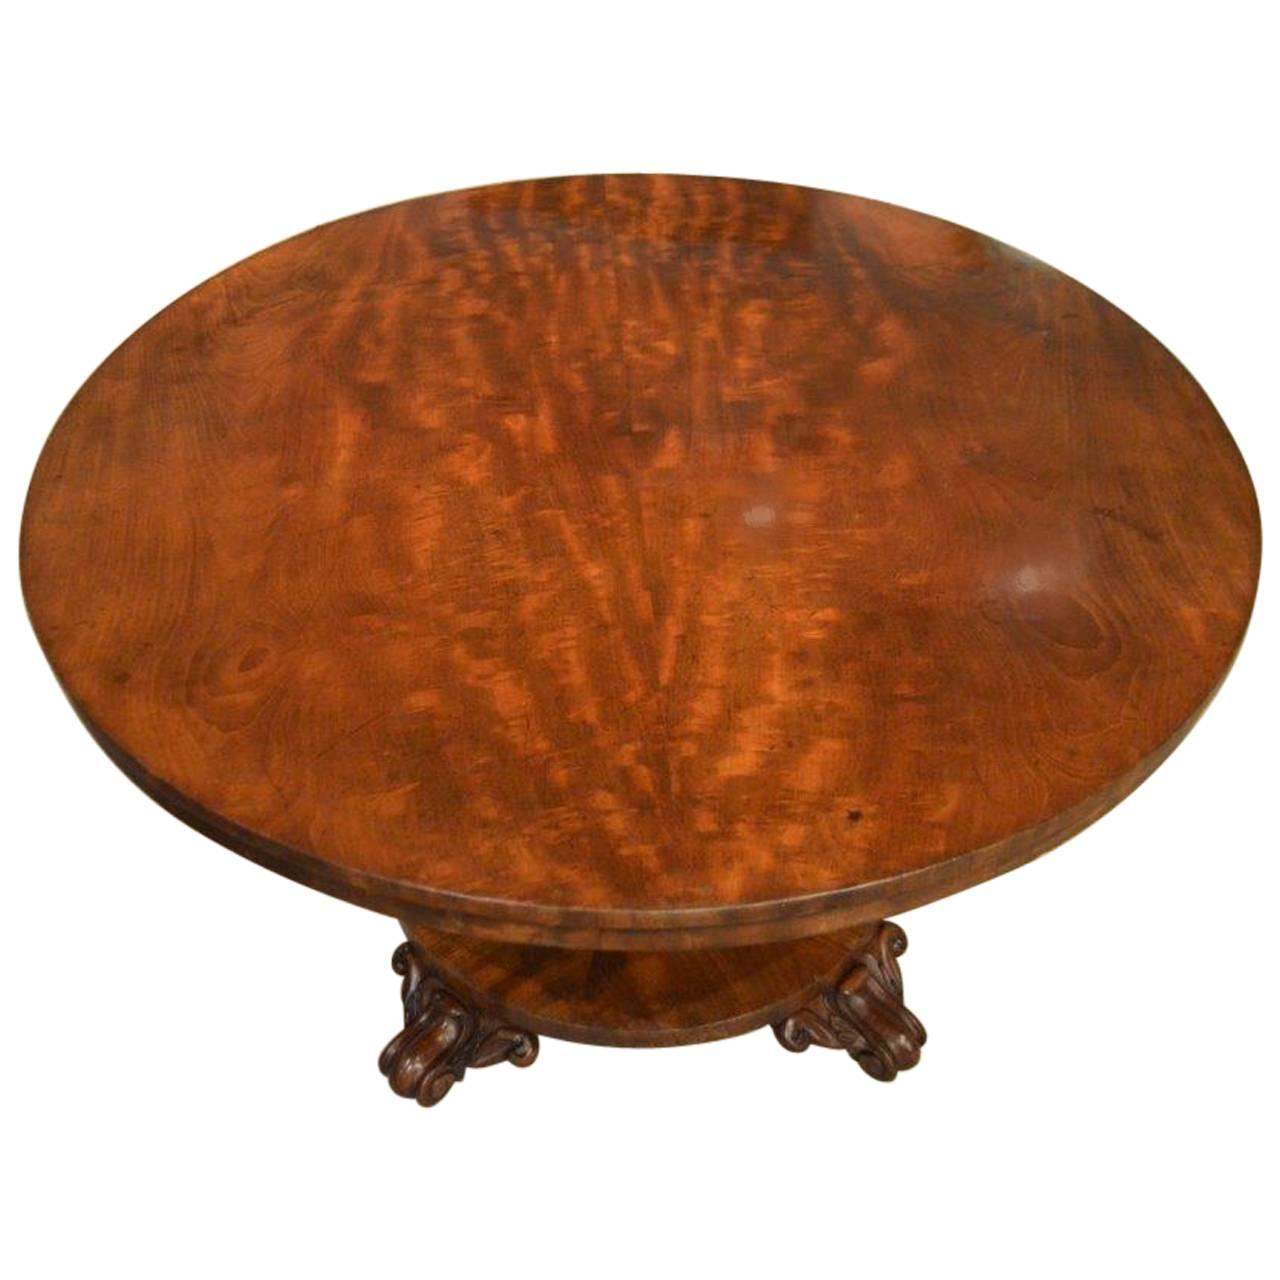 Mahogany Early Victorian Period Circular Loop / Dining Table